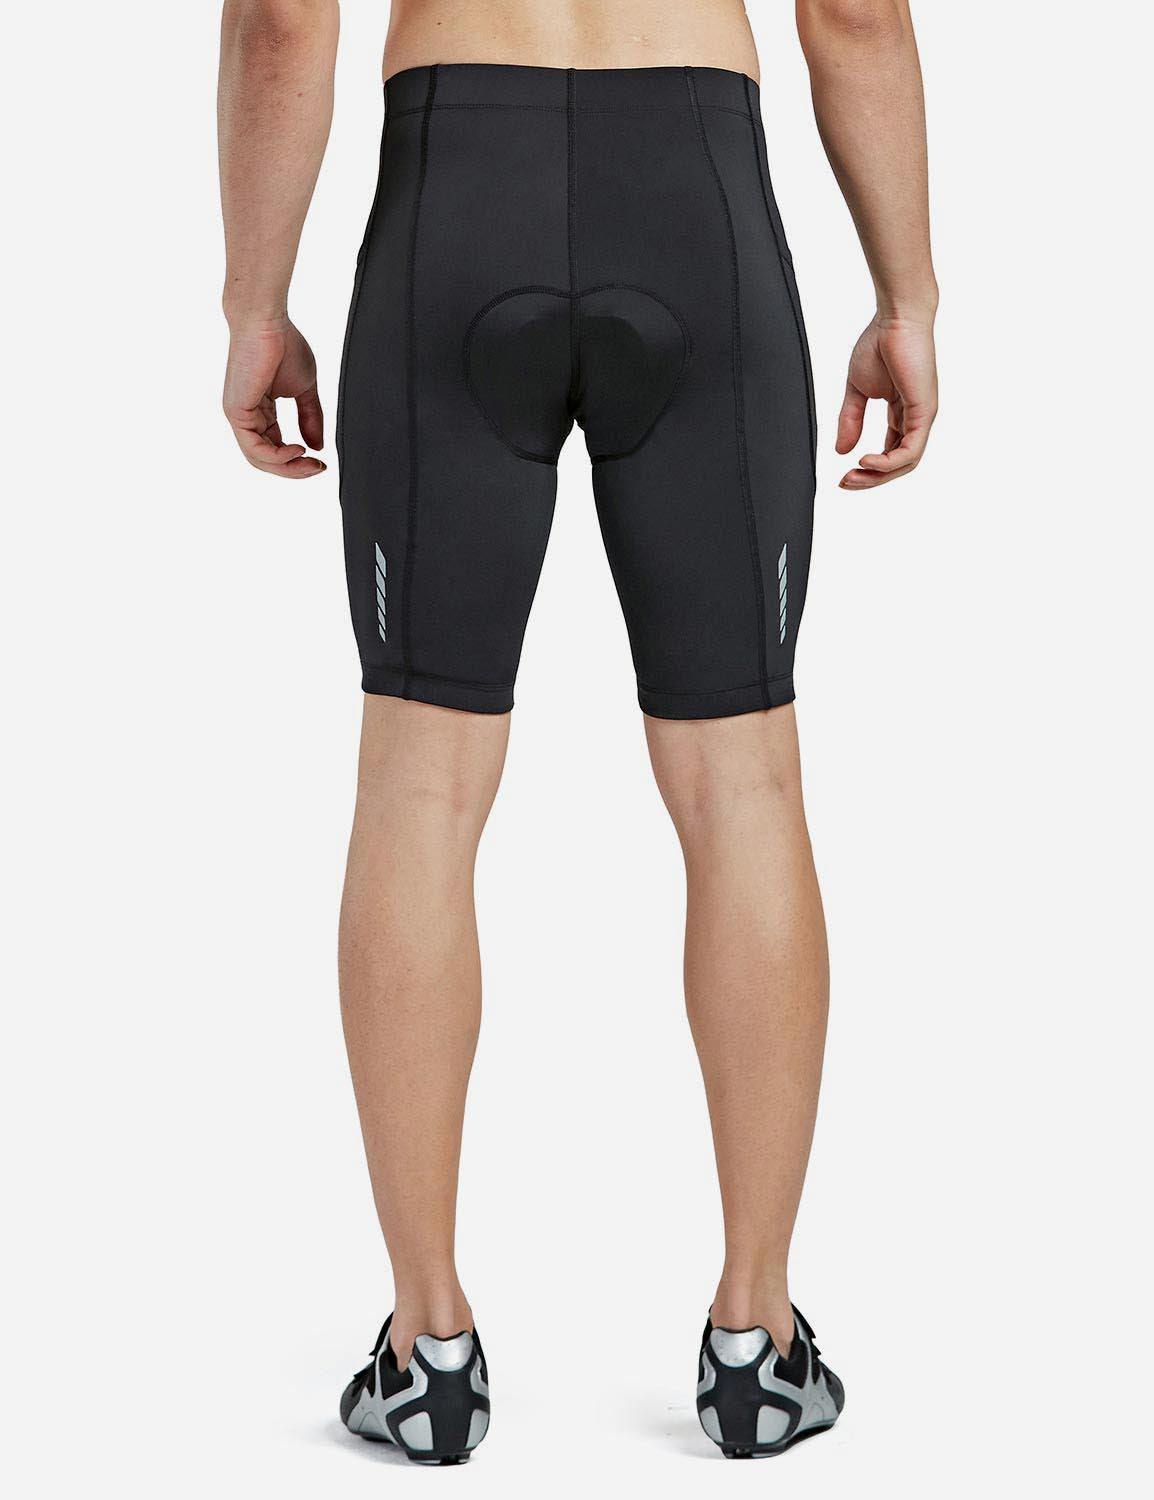 Baleaf Men's 3D Chamois Padded Low Cut Long Compression Cycling Shorts aai070 Black Back